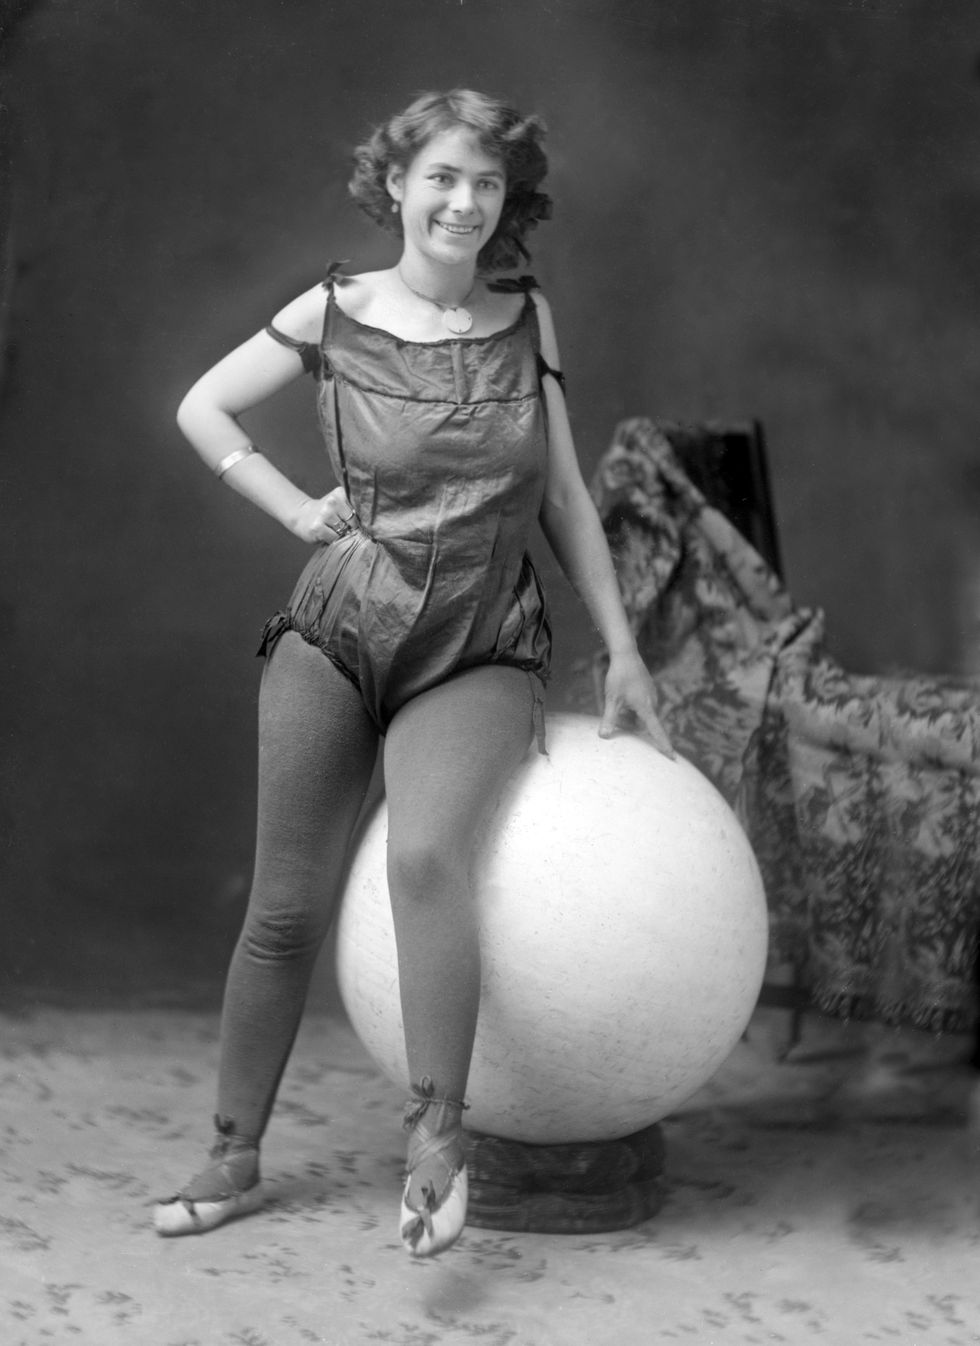 Victorian female swimsuit fashions, ca. 1895.